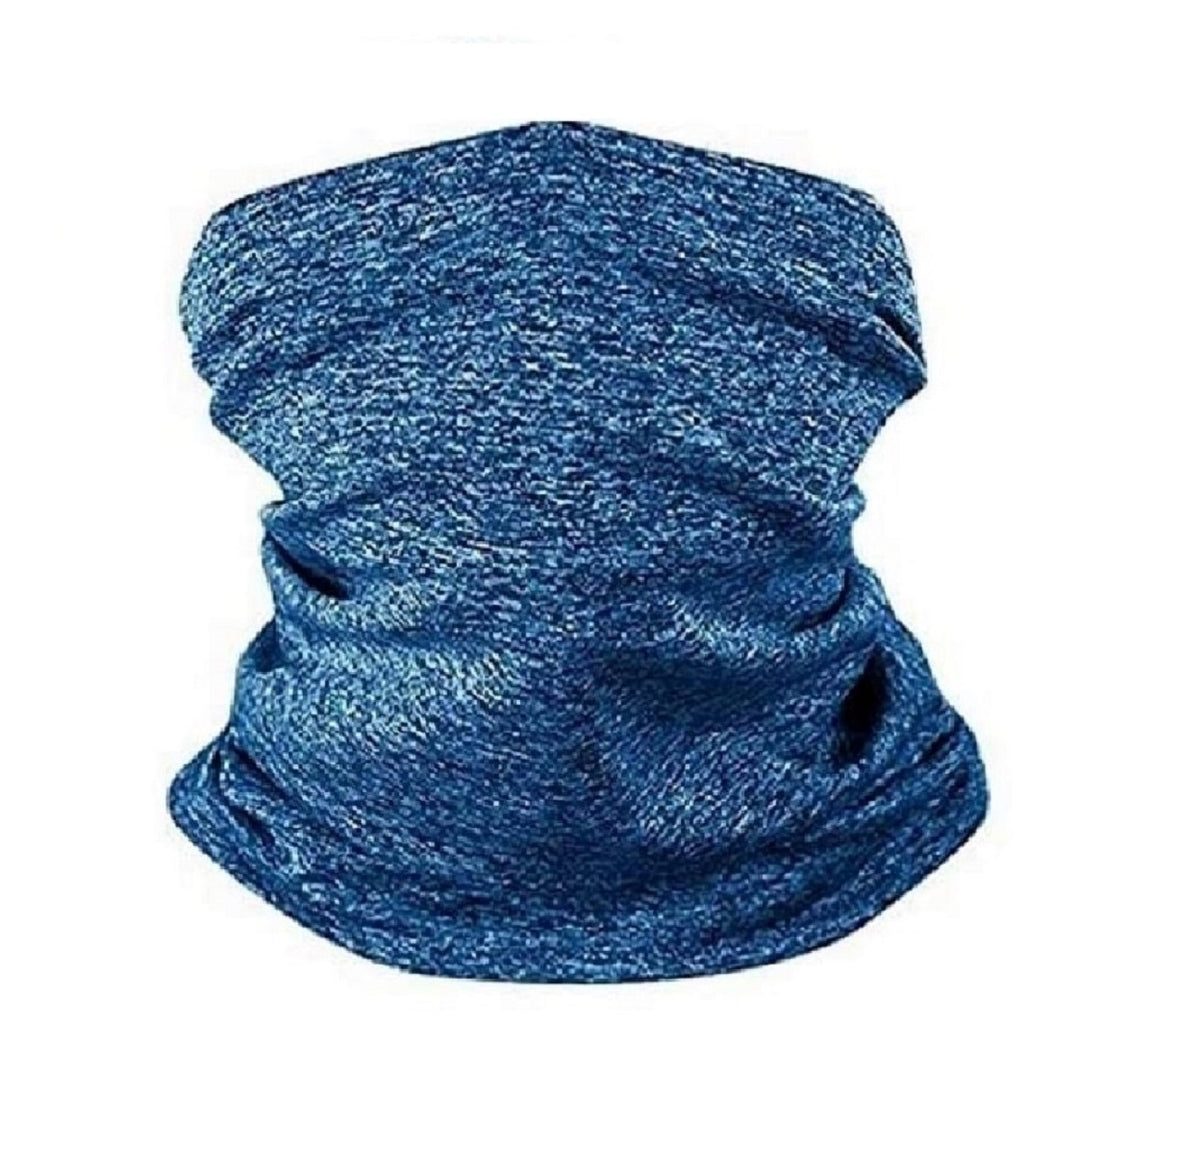 Magic Headwear Cool Anchor Outdoor Scarf Headbands Bandana Mask Neck Gaiter Head Wrap Mask Sweatband